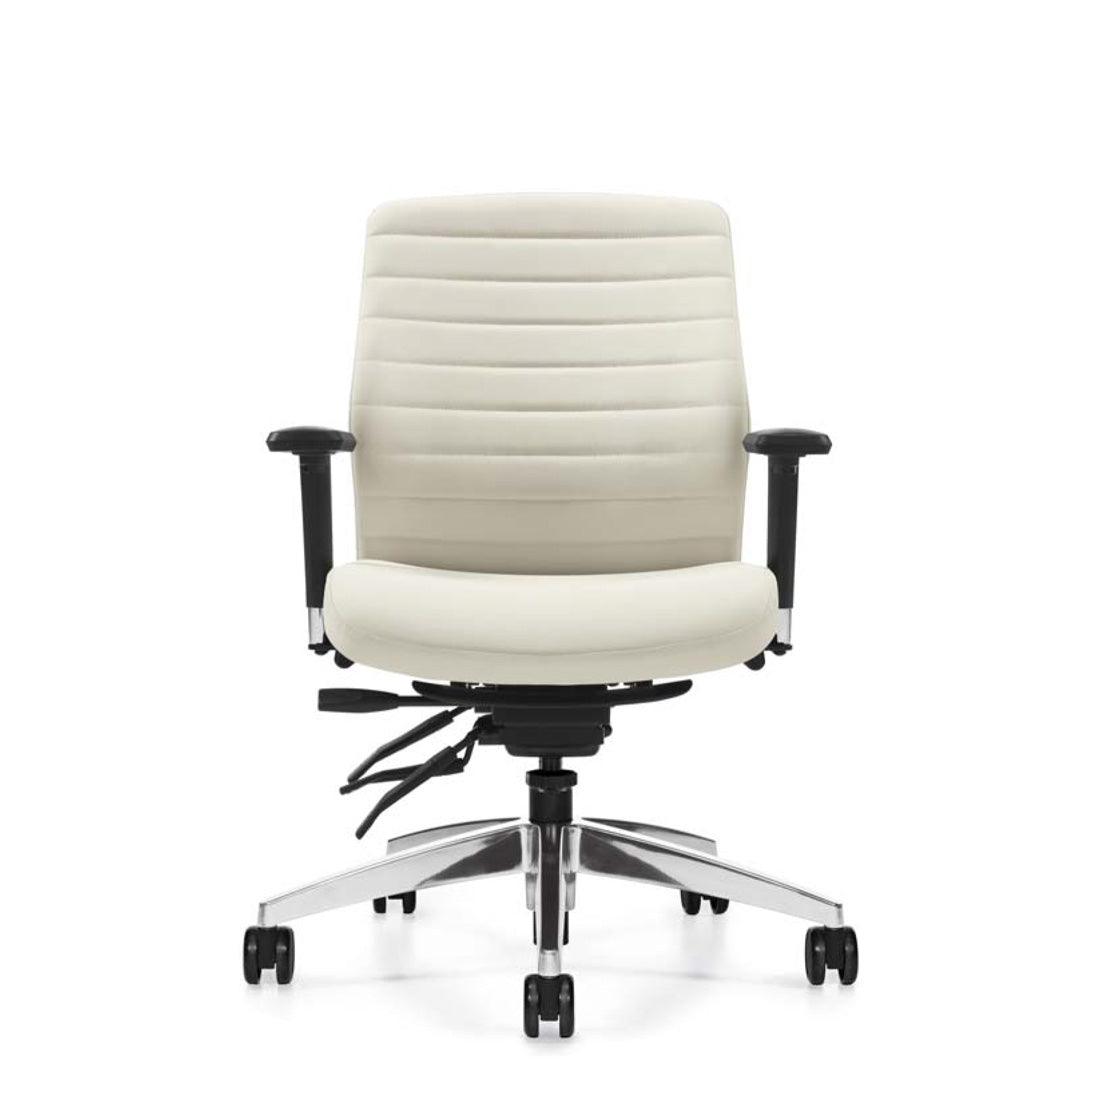 CUSTOMIZED Multi-Tilter Chair 2851LM-3 - Kainosbuy.com